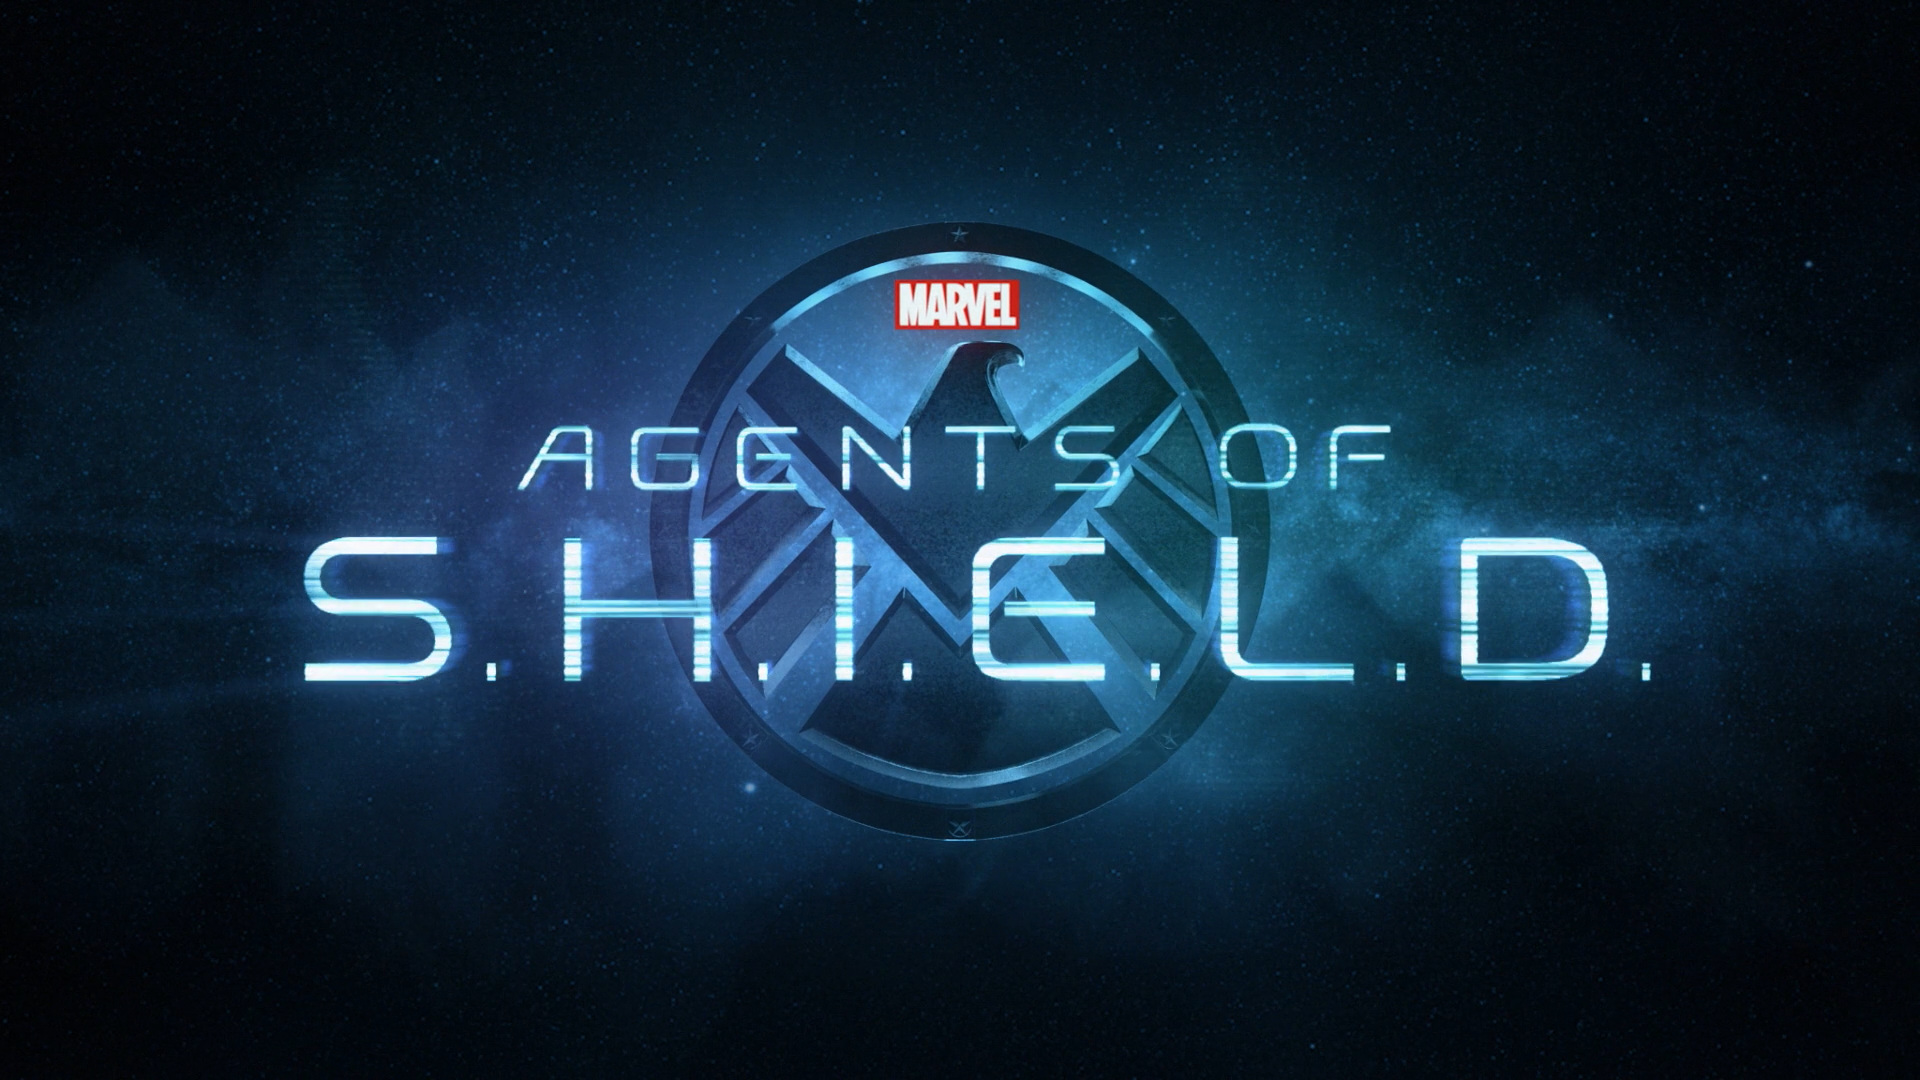 Agents of S.H.I.E.L.D. Marvel Cinematic Universe